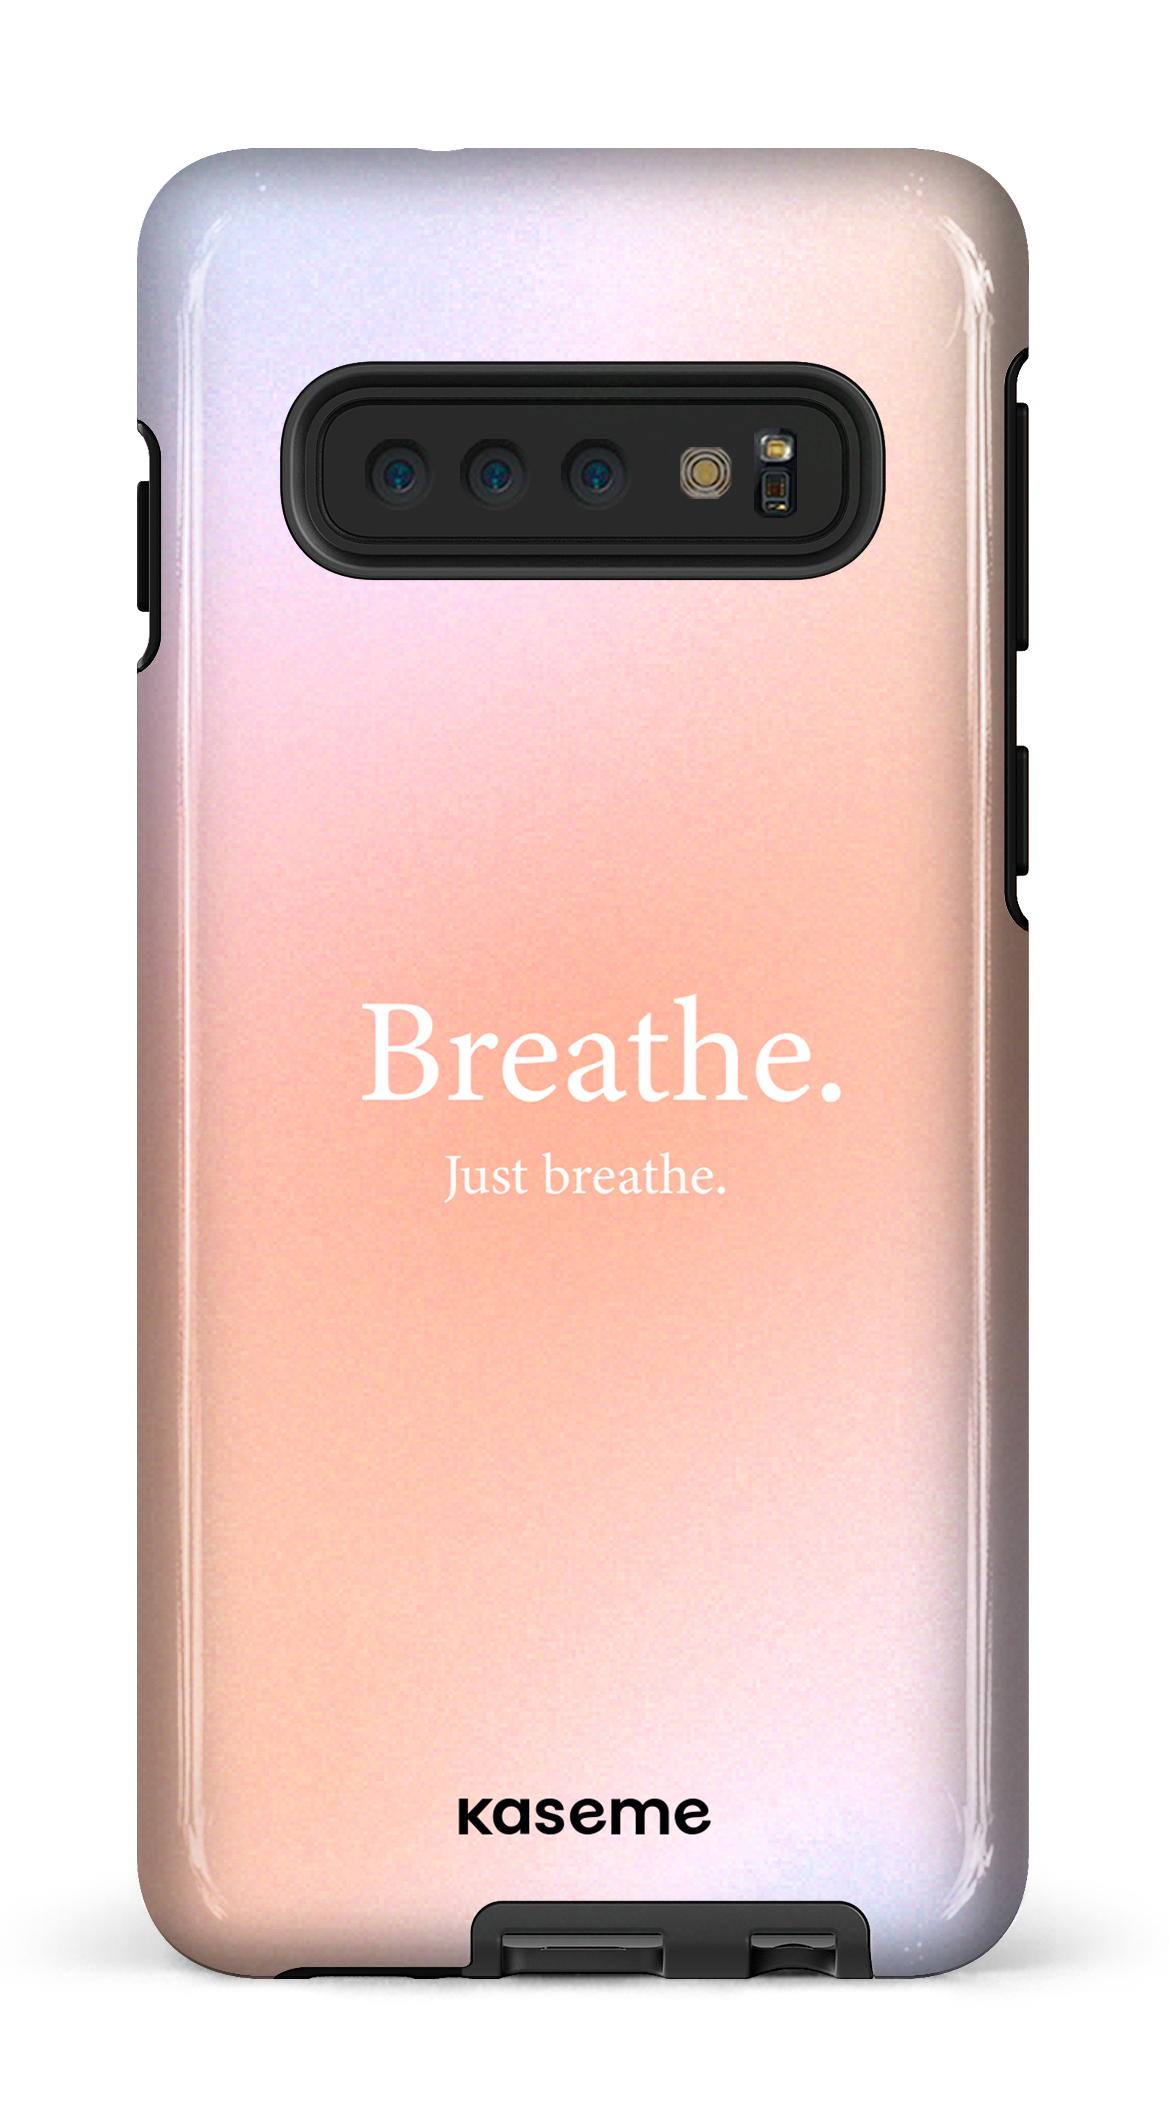 Just breathe - Galaxy S10